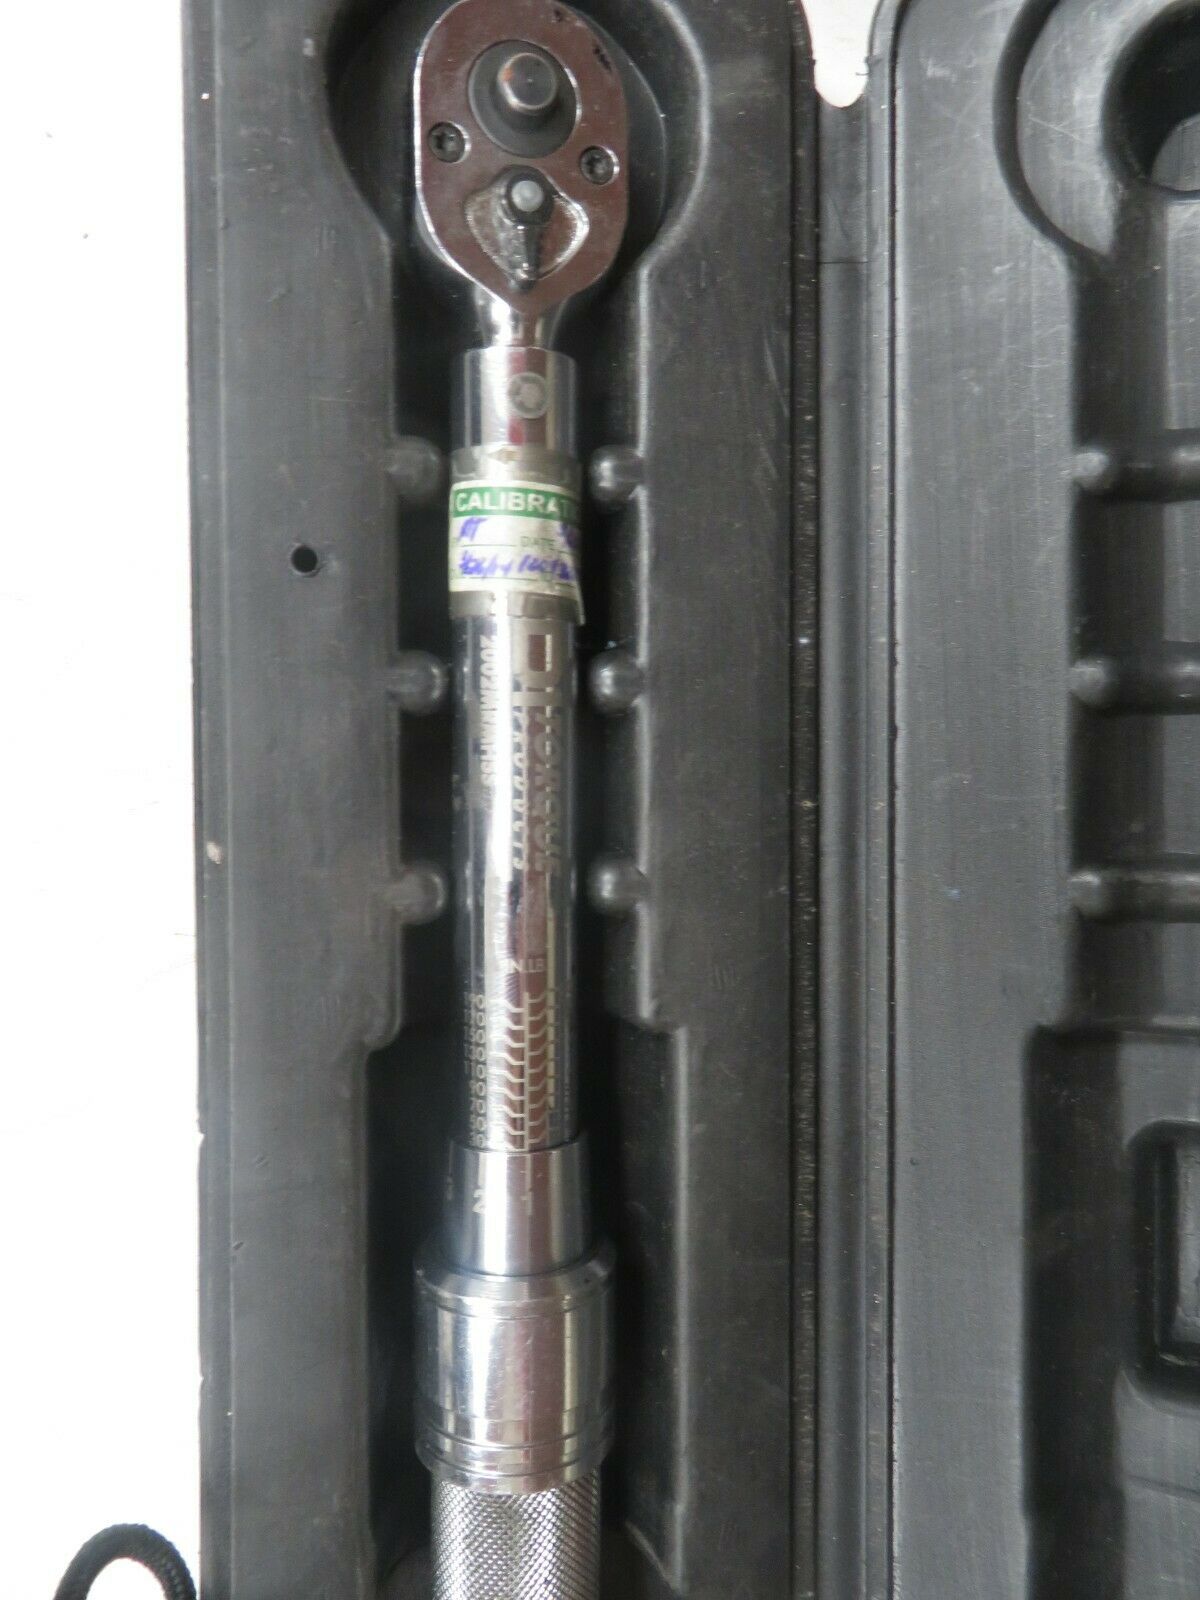 Metal Kurled Handle Torque Wrench CDI #2002MRMH USA 3/8" Drive 30-200 in.lbs